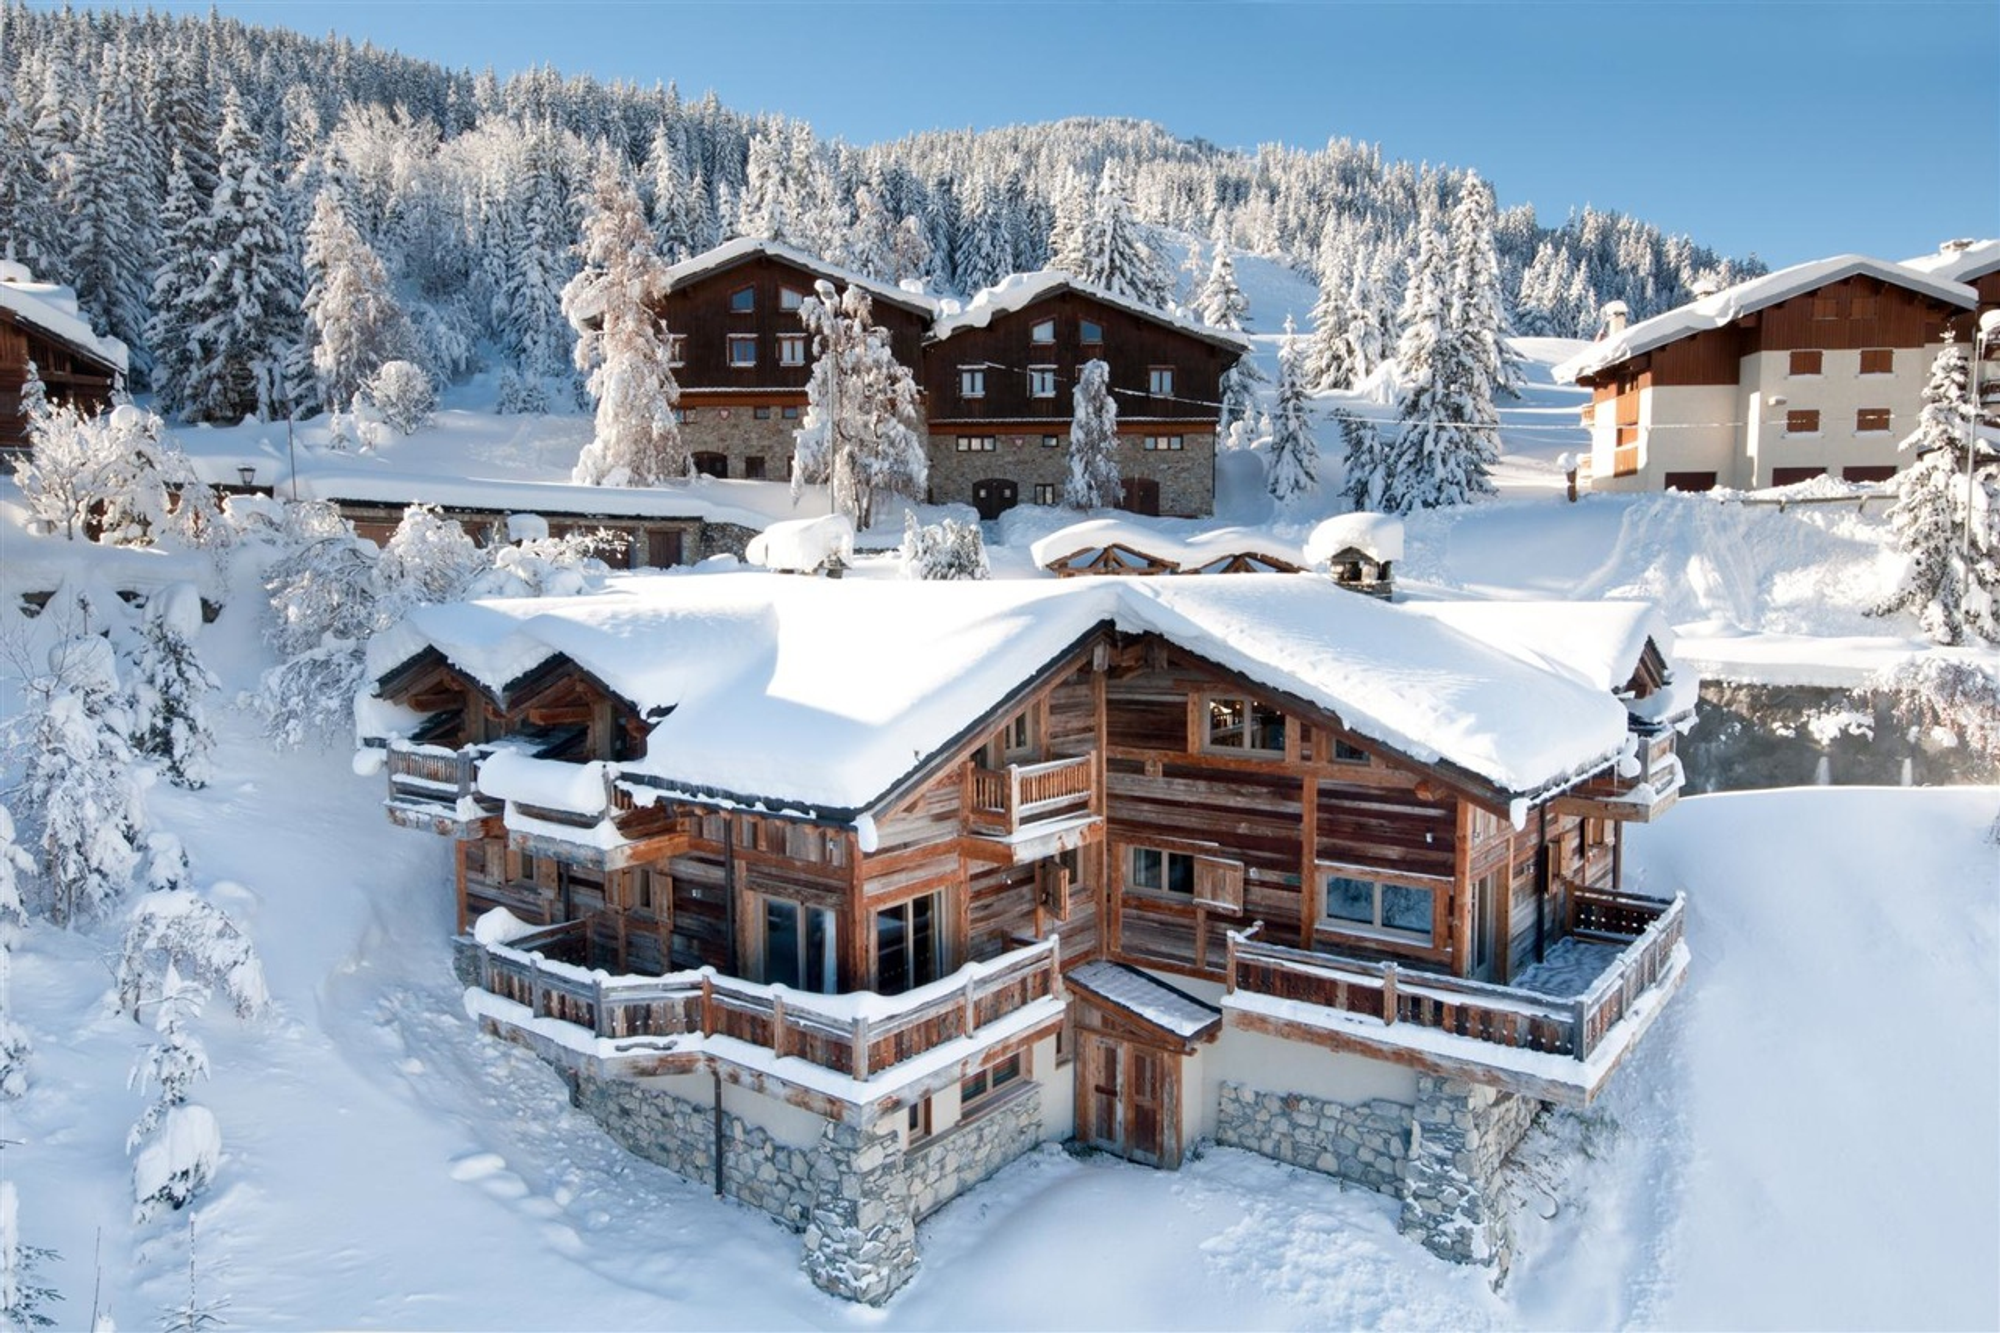 Choosing the Right Ski Accommodation